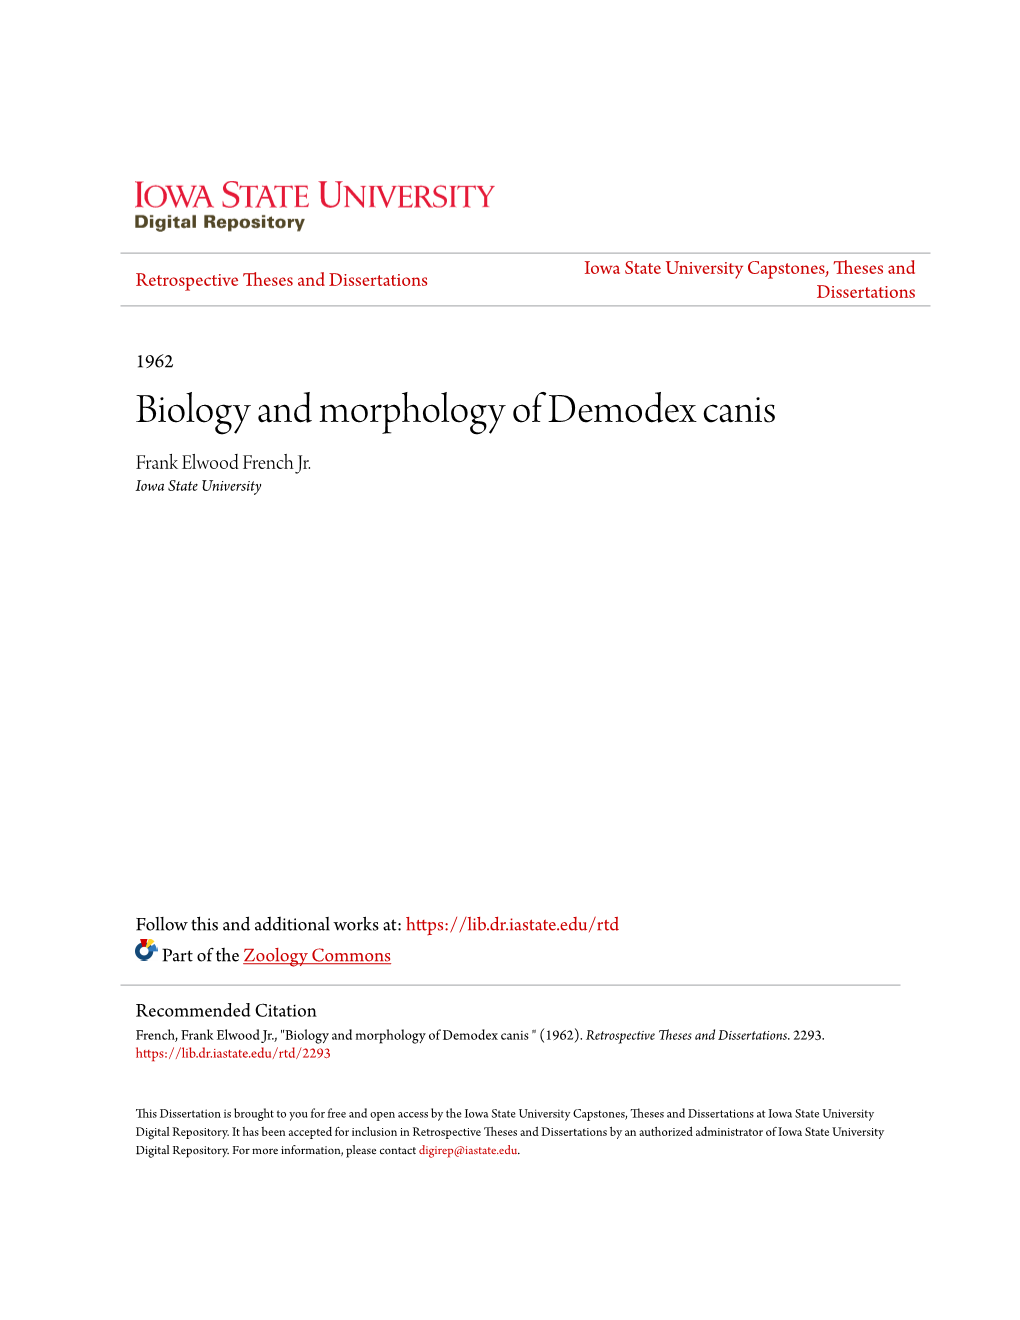 Biology and Morphology of Demodex Canis Frank Elwood French Jr